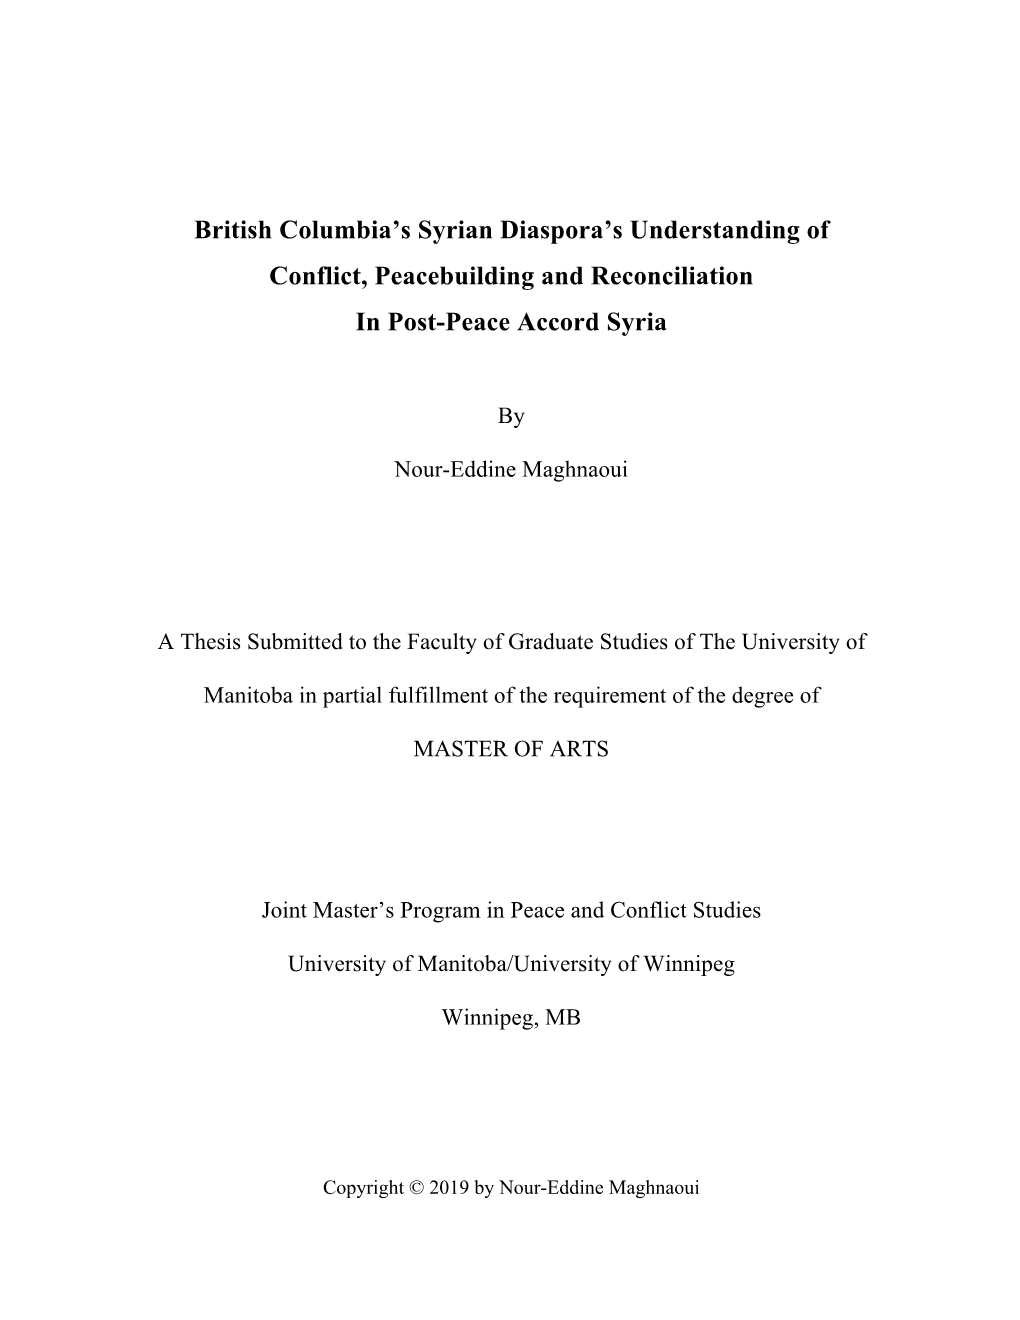 British Columbia's Syrian Diaspora's Understanding of Conflict